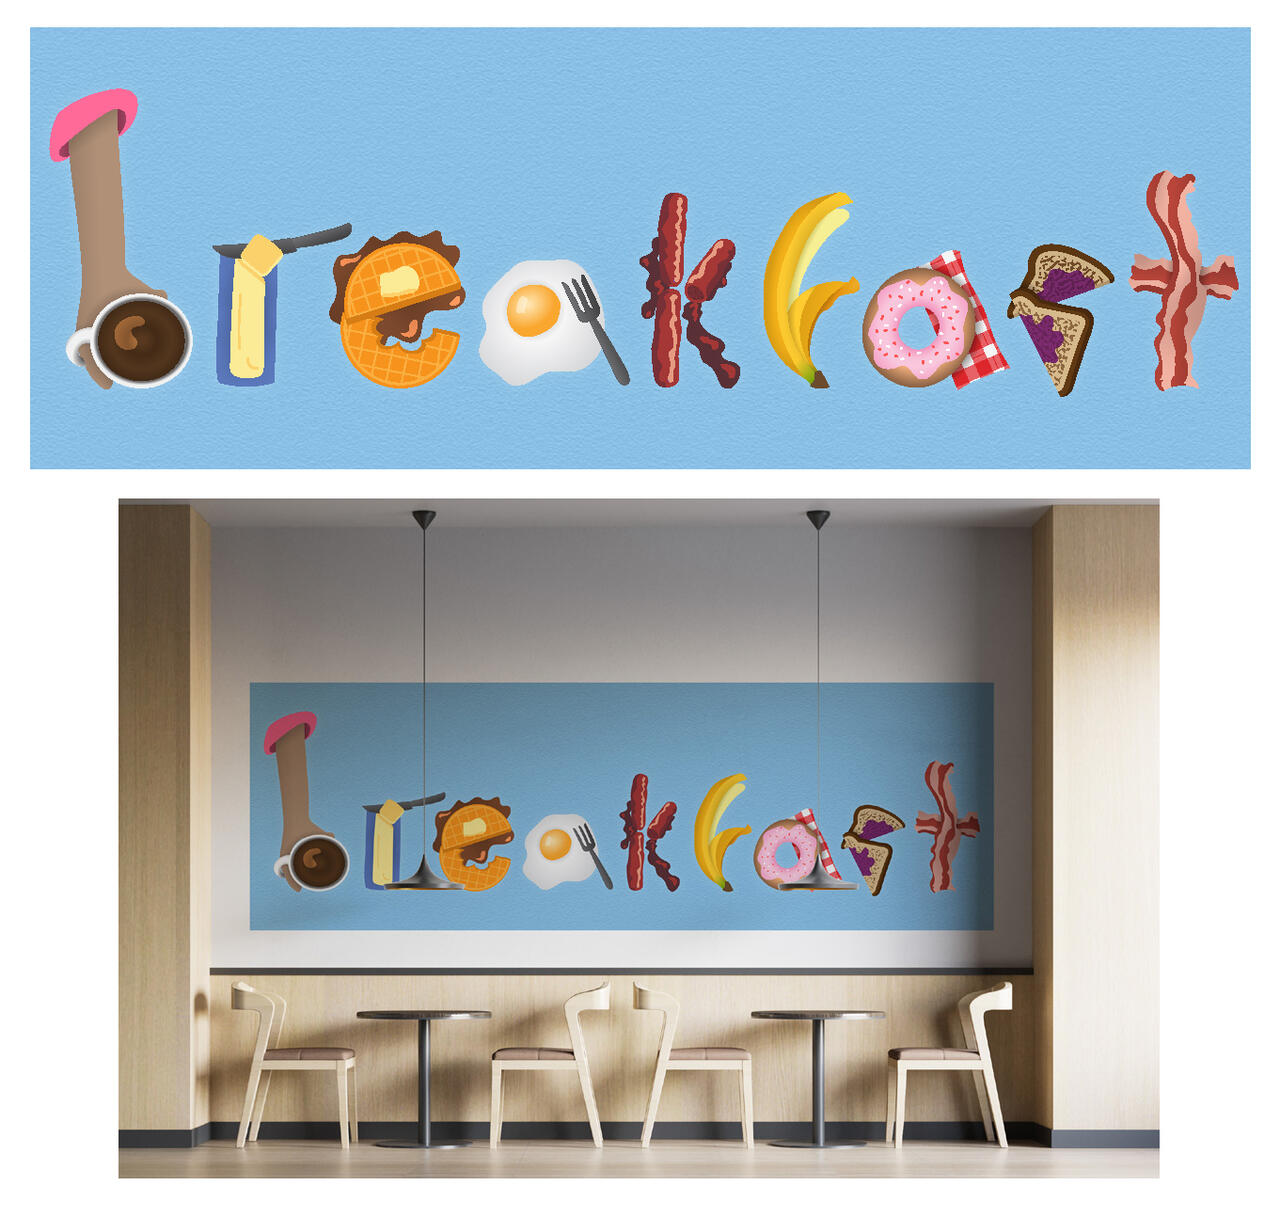 breakfast typography. Each letter resembles a popular american breakfast item